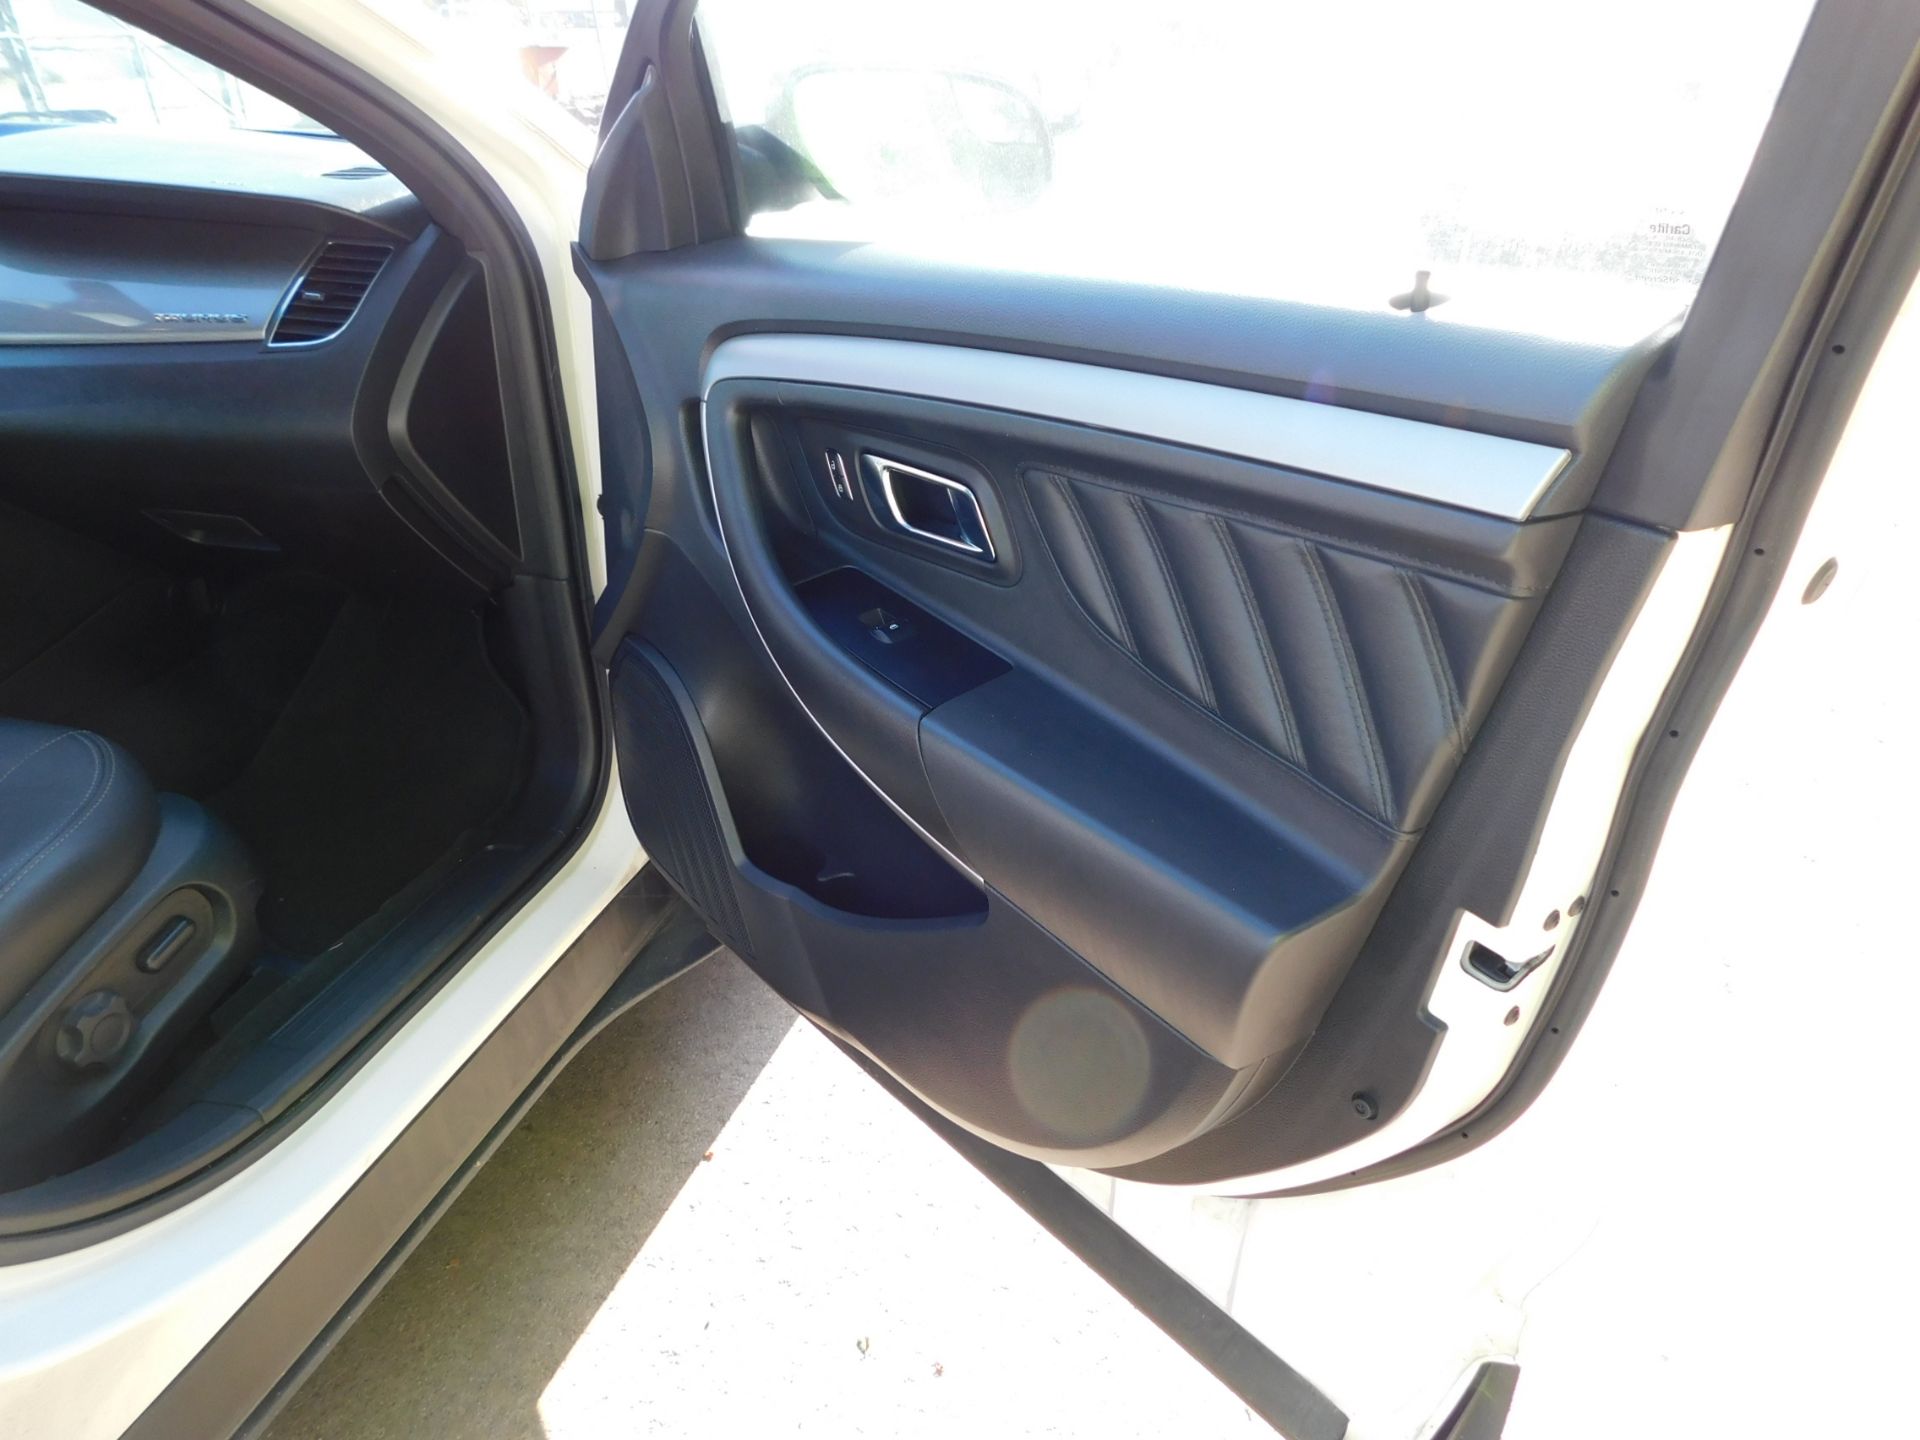 2015 Ford Taurus SEL 4-Door Sedan, vin 1FAHP2E80FG182717, Automatic Transmission, PW,PL,AC,Leather - Image 35 of 42